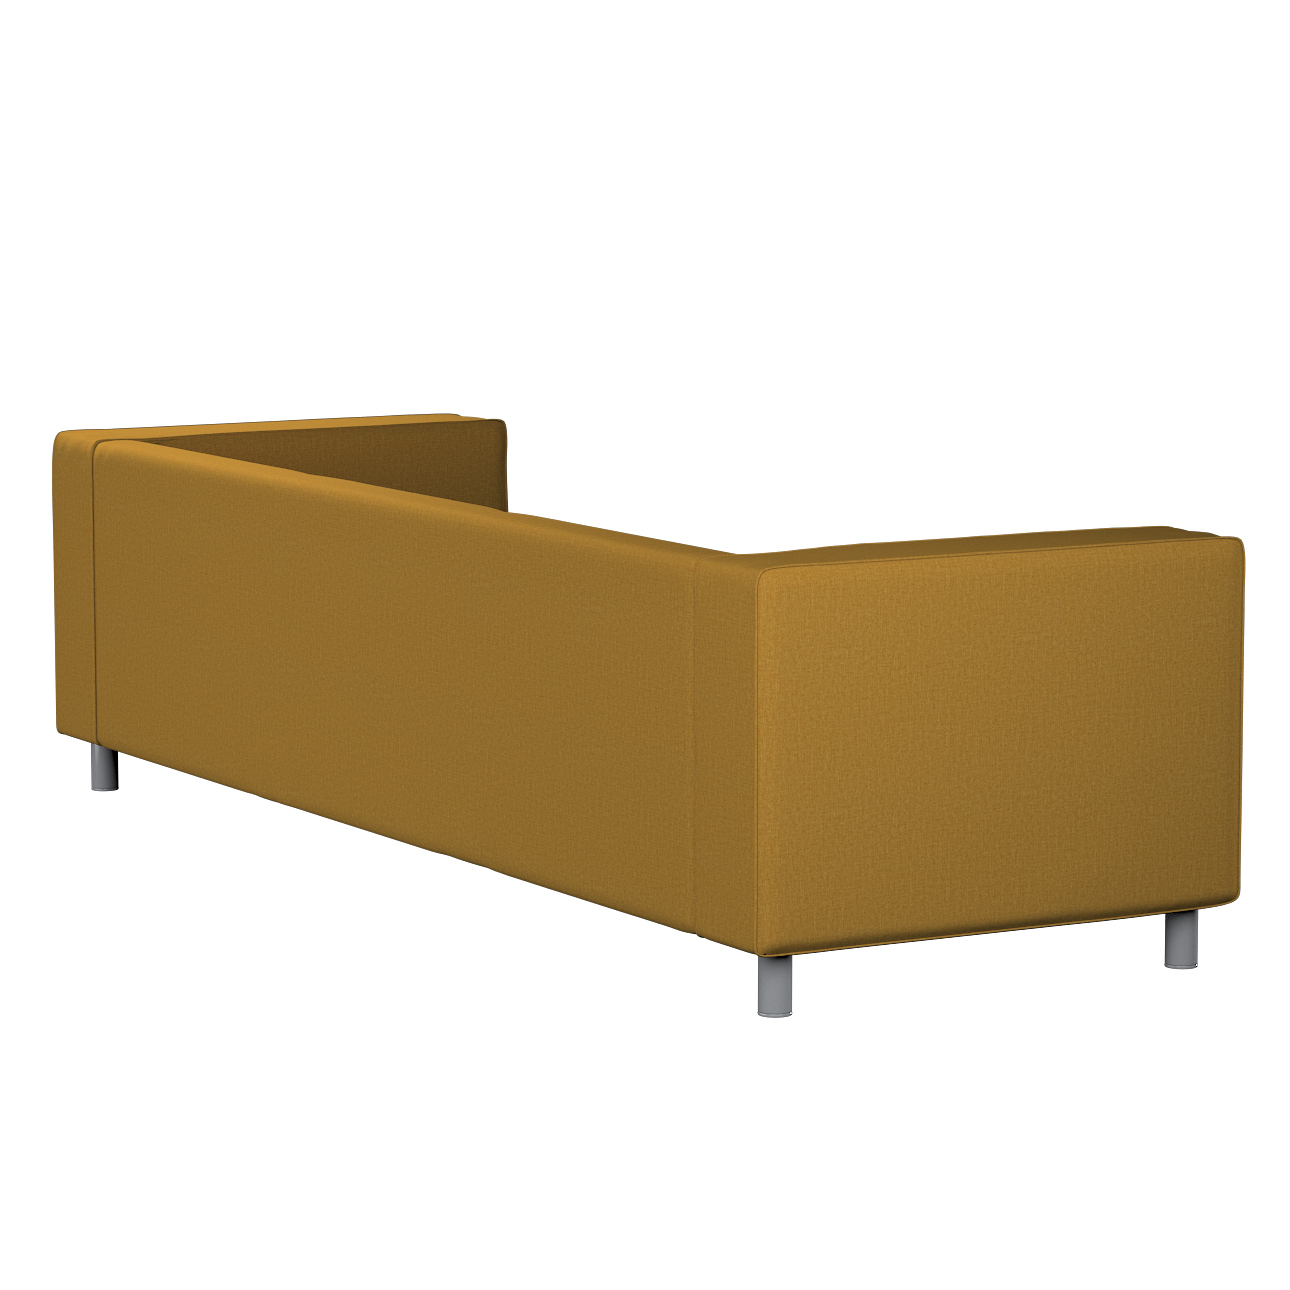 Bezug für Klippan 4-Sitzer Sofa, senfgelb, Bezug für Klippan 4-Sitzer, City günstig online kaufen